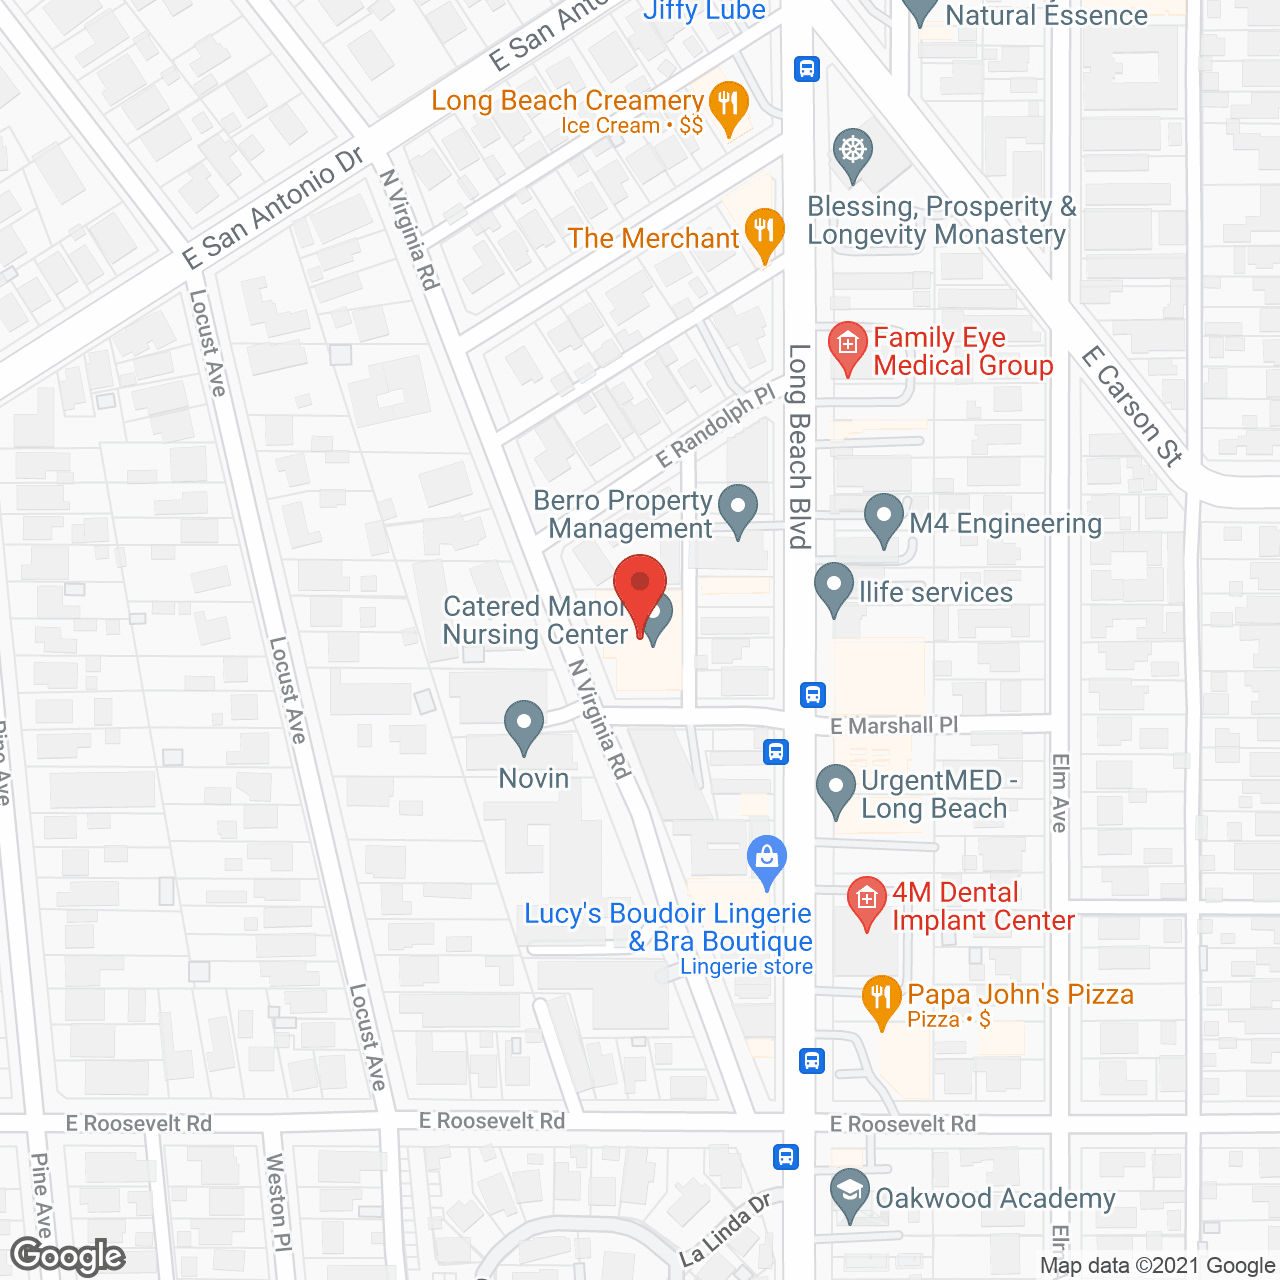 Catered Manor Nursing Center in google map